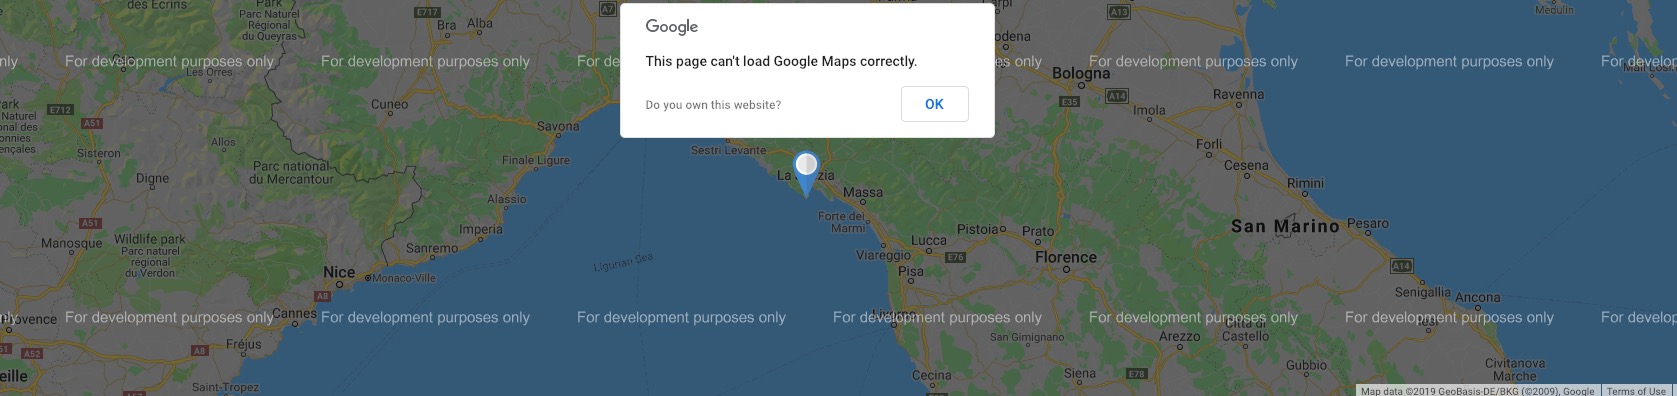 Google Maps - map not found problem